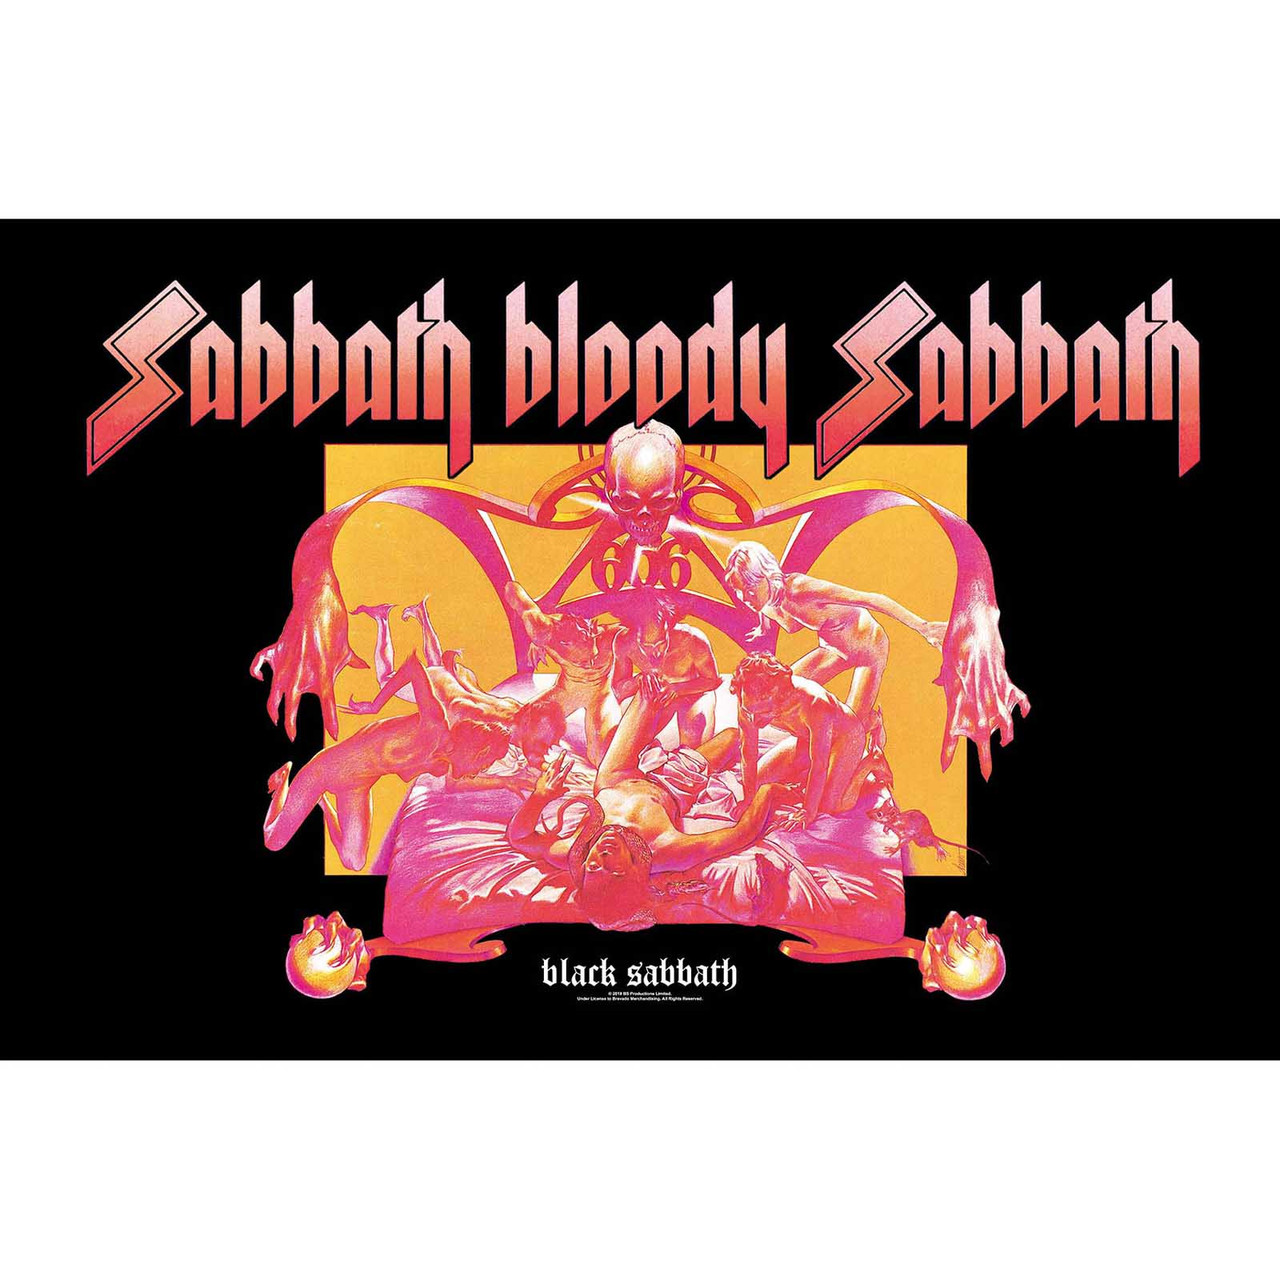 Black Sabbath 'Sabbath Bloody Sabbath' Textile Poster